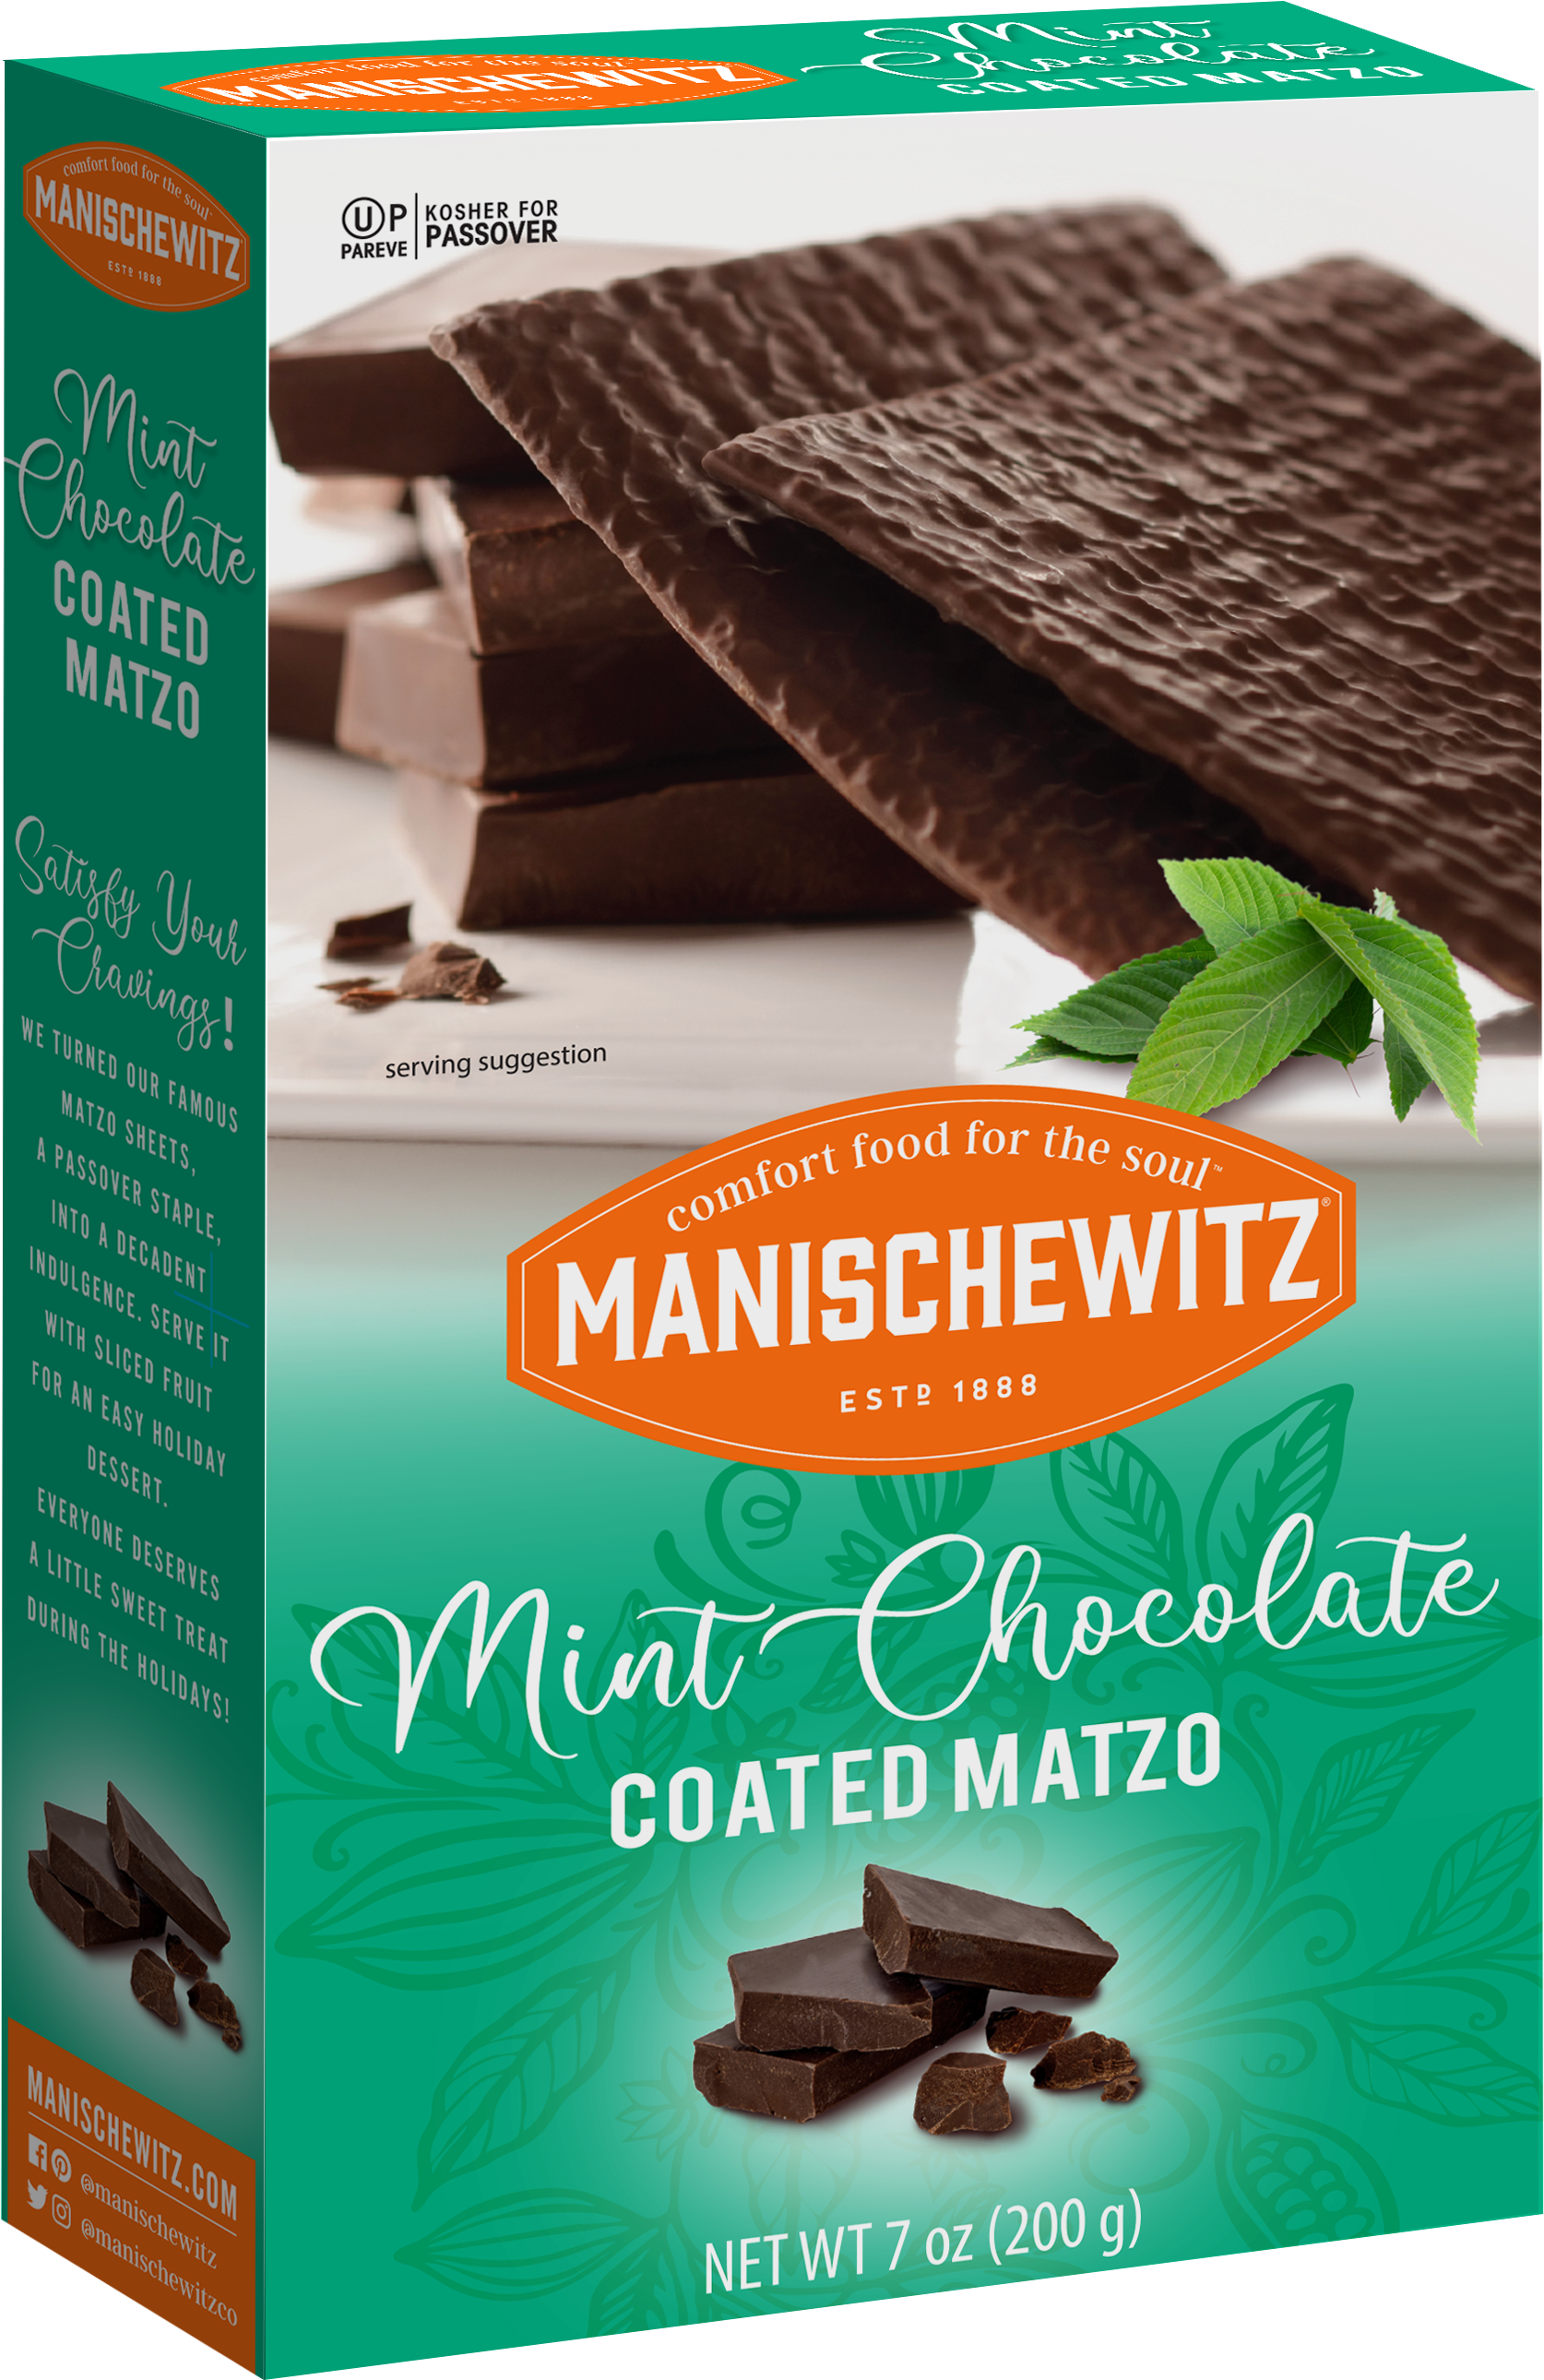 Manischewitz Mint Chocolate Coated Matzo.png